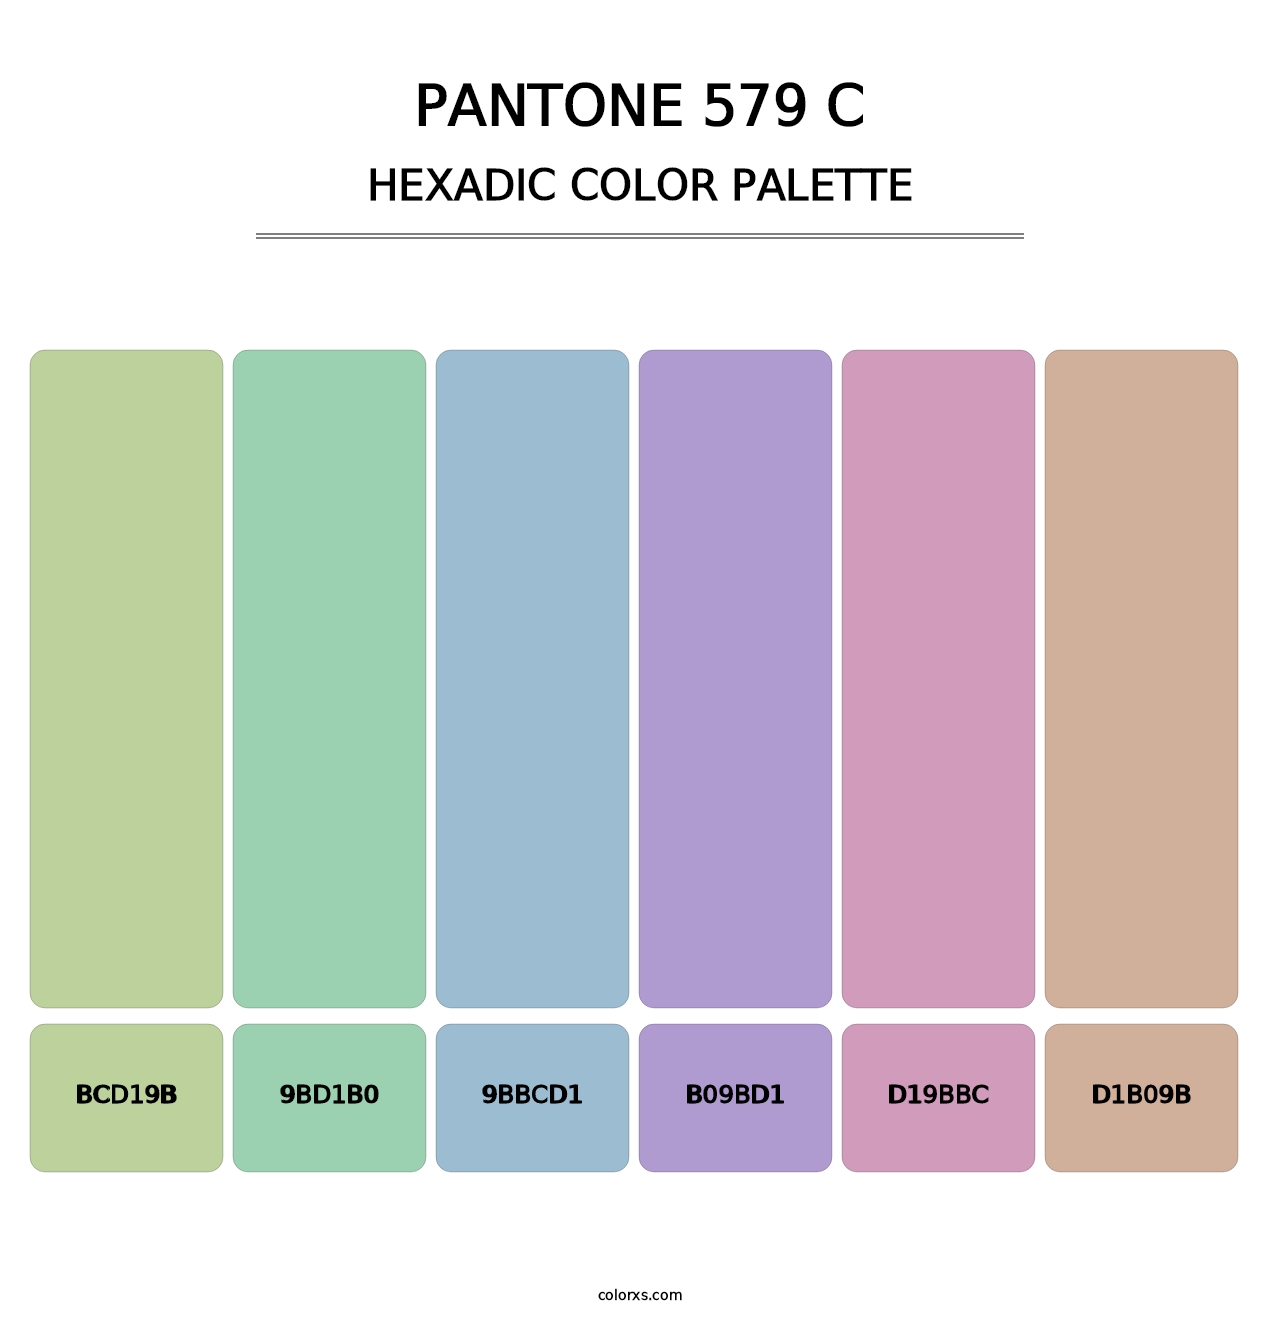 PANTONE 579 C - Hexadic Color Palette